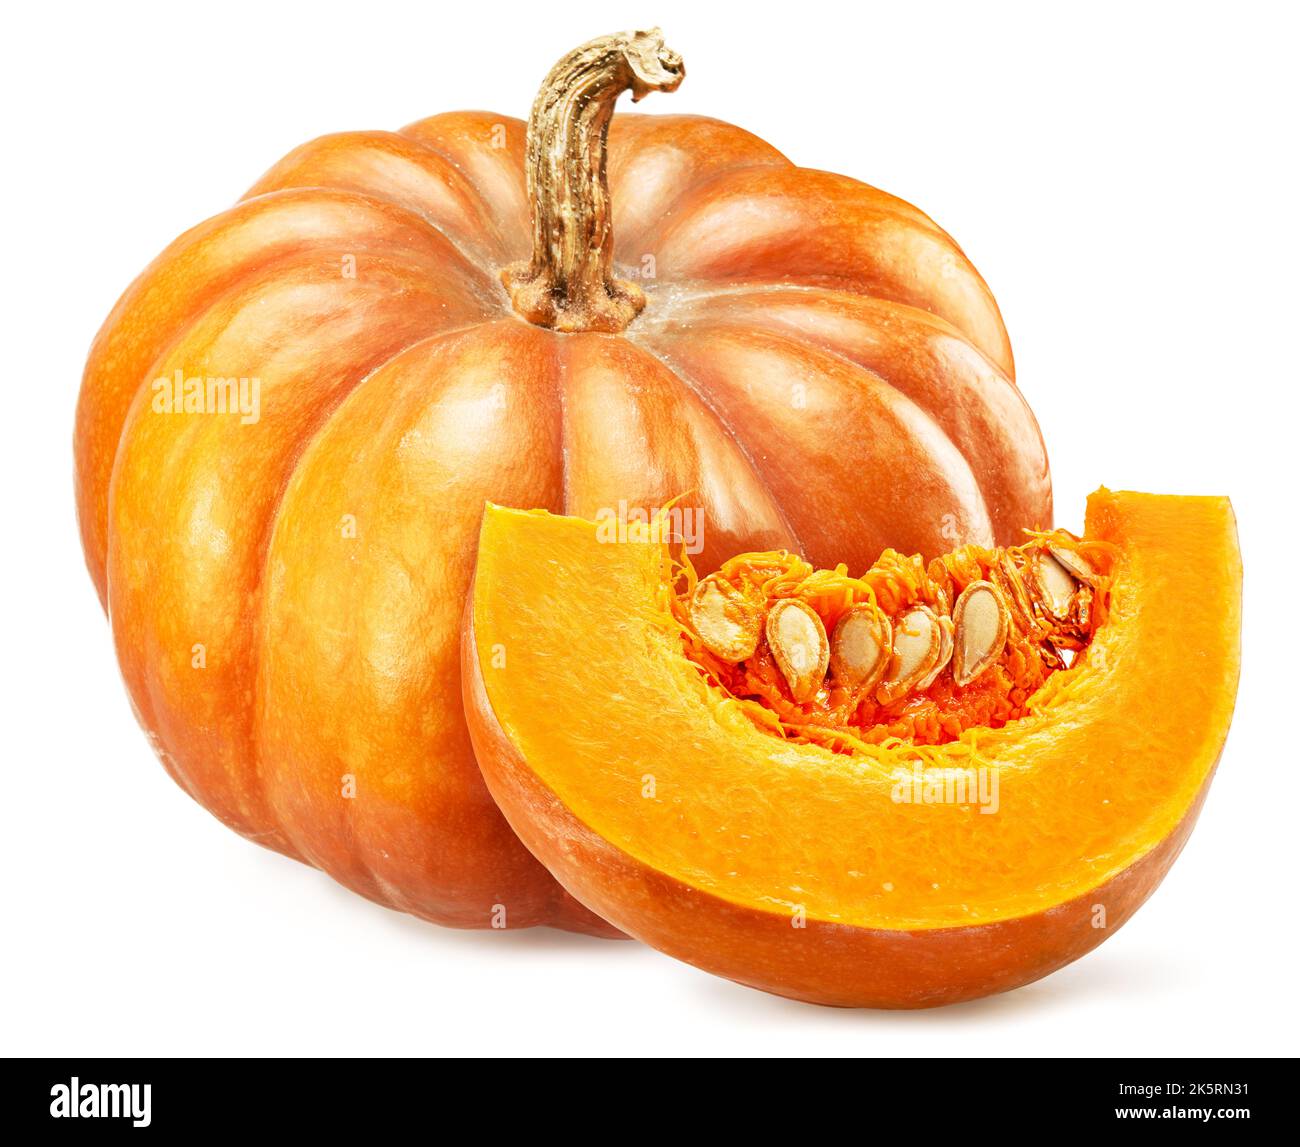 Orange round pumpkin and pumpkin slice isolated on white background. Stock Photo